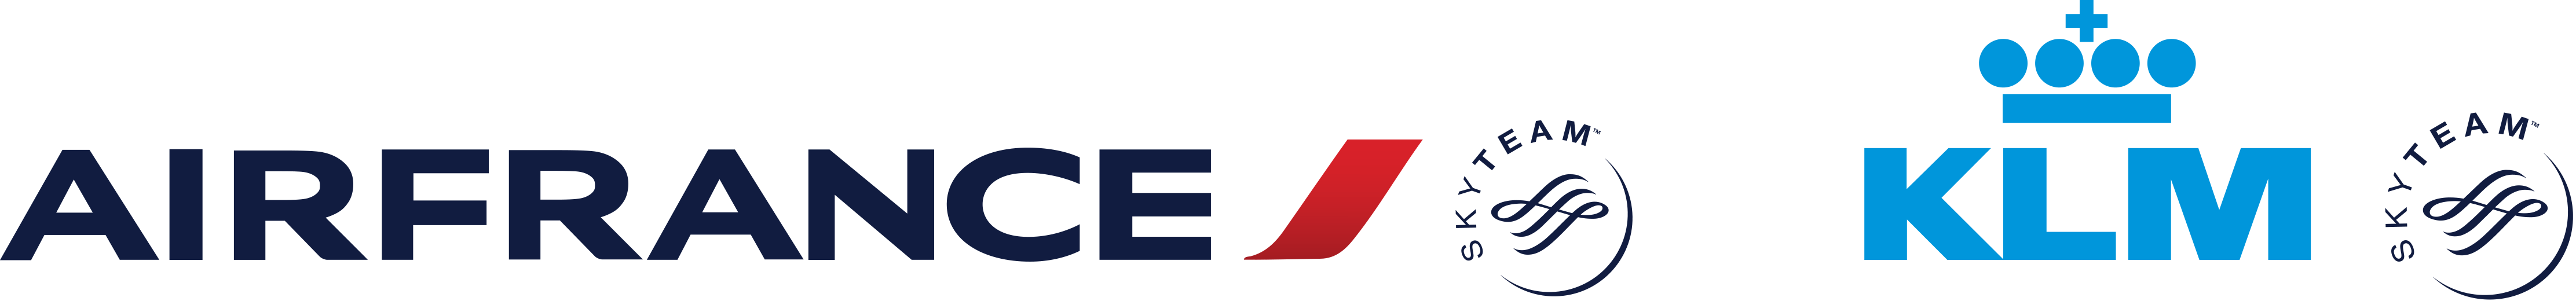 Air France KLM logos